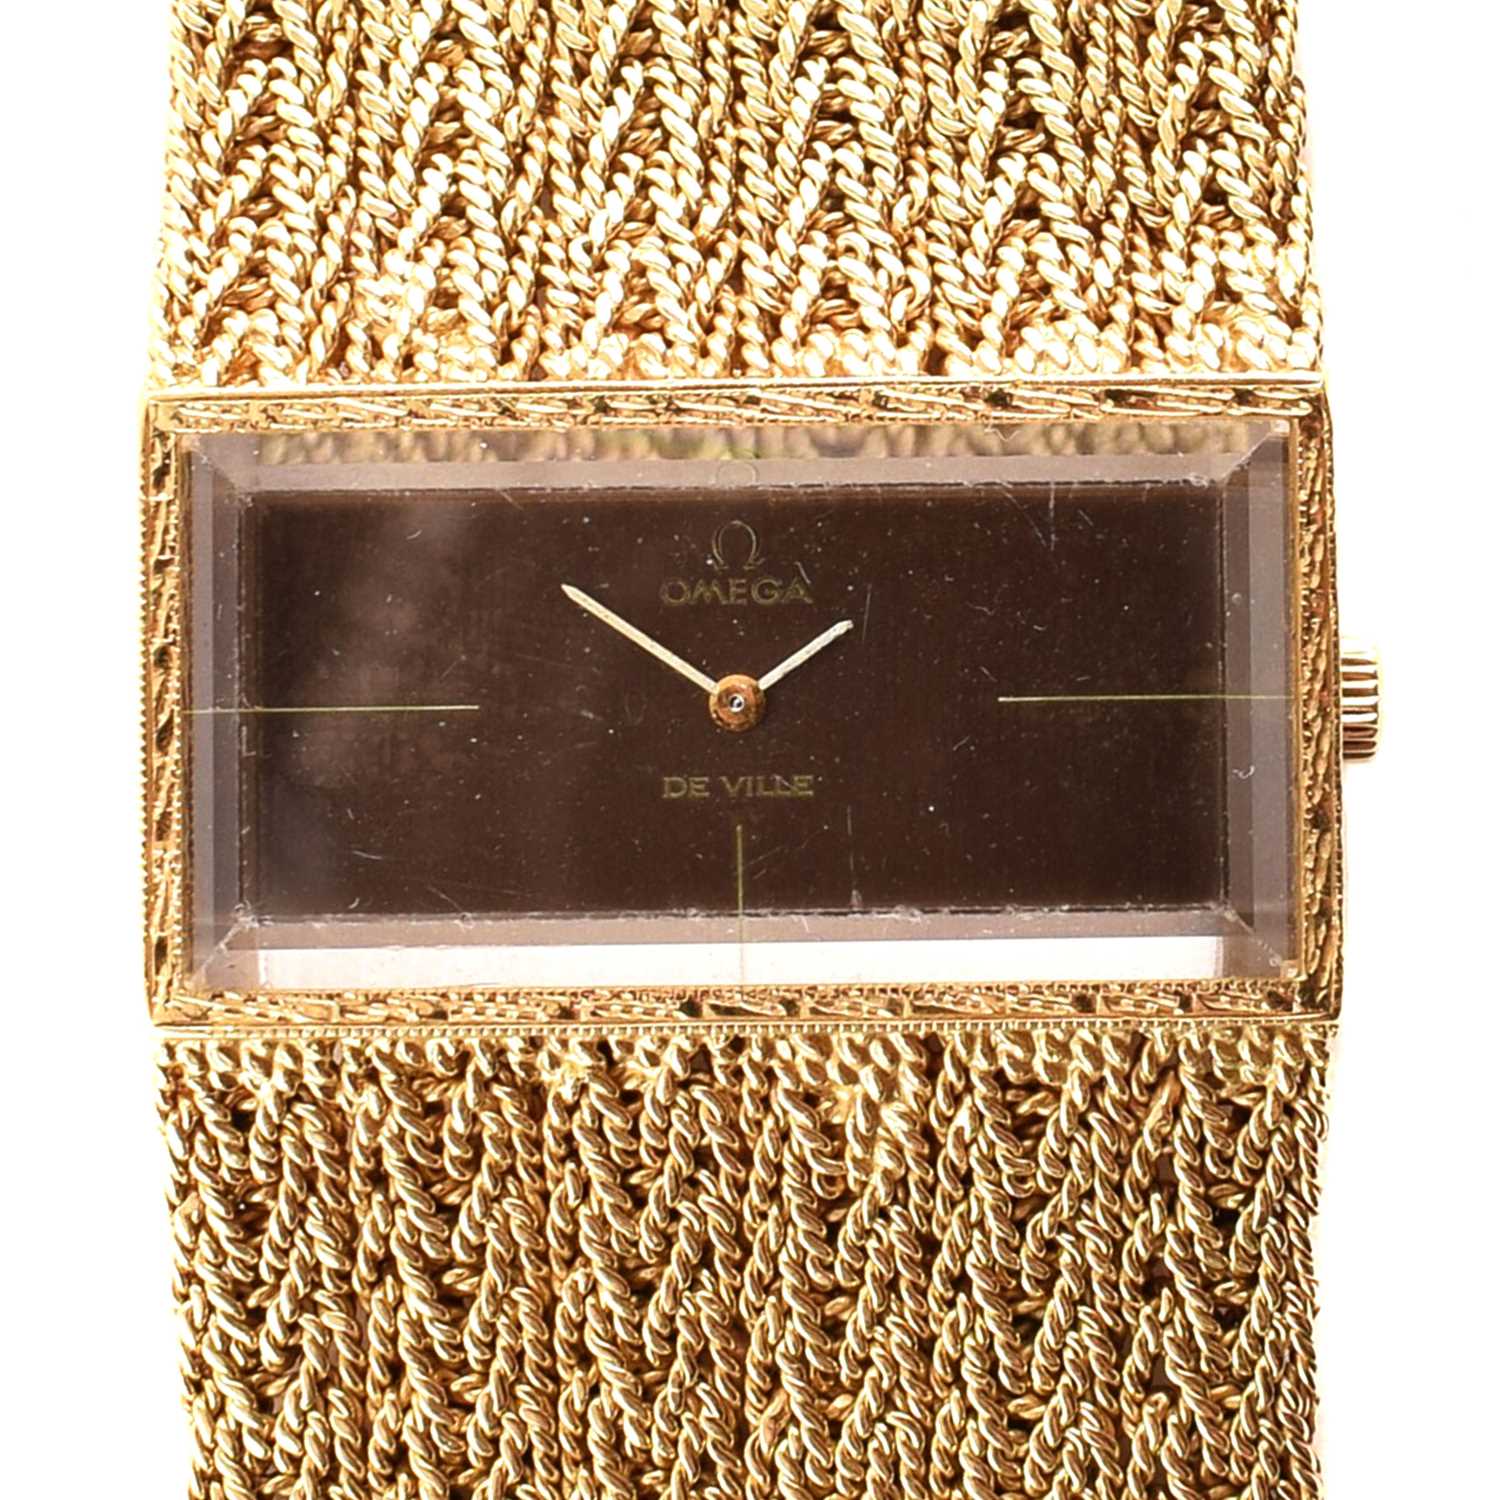 88 - A 1970s 18ct gold Omega De Ville manual wind bracelet watch, 